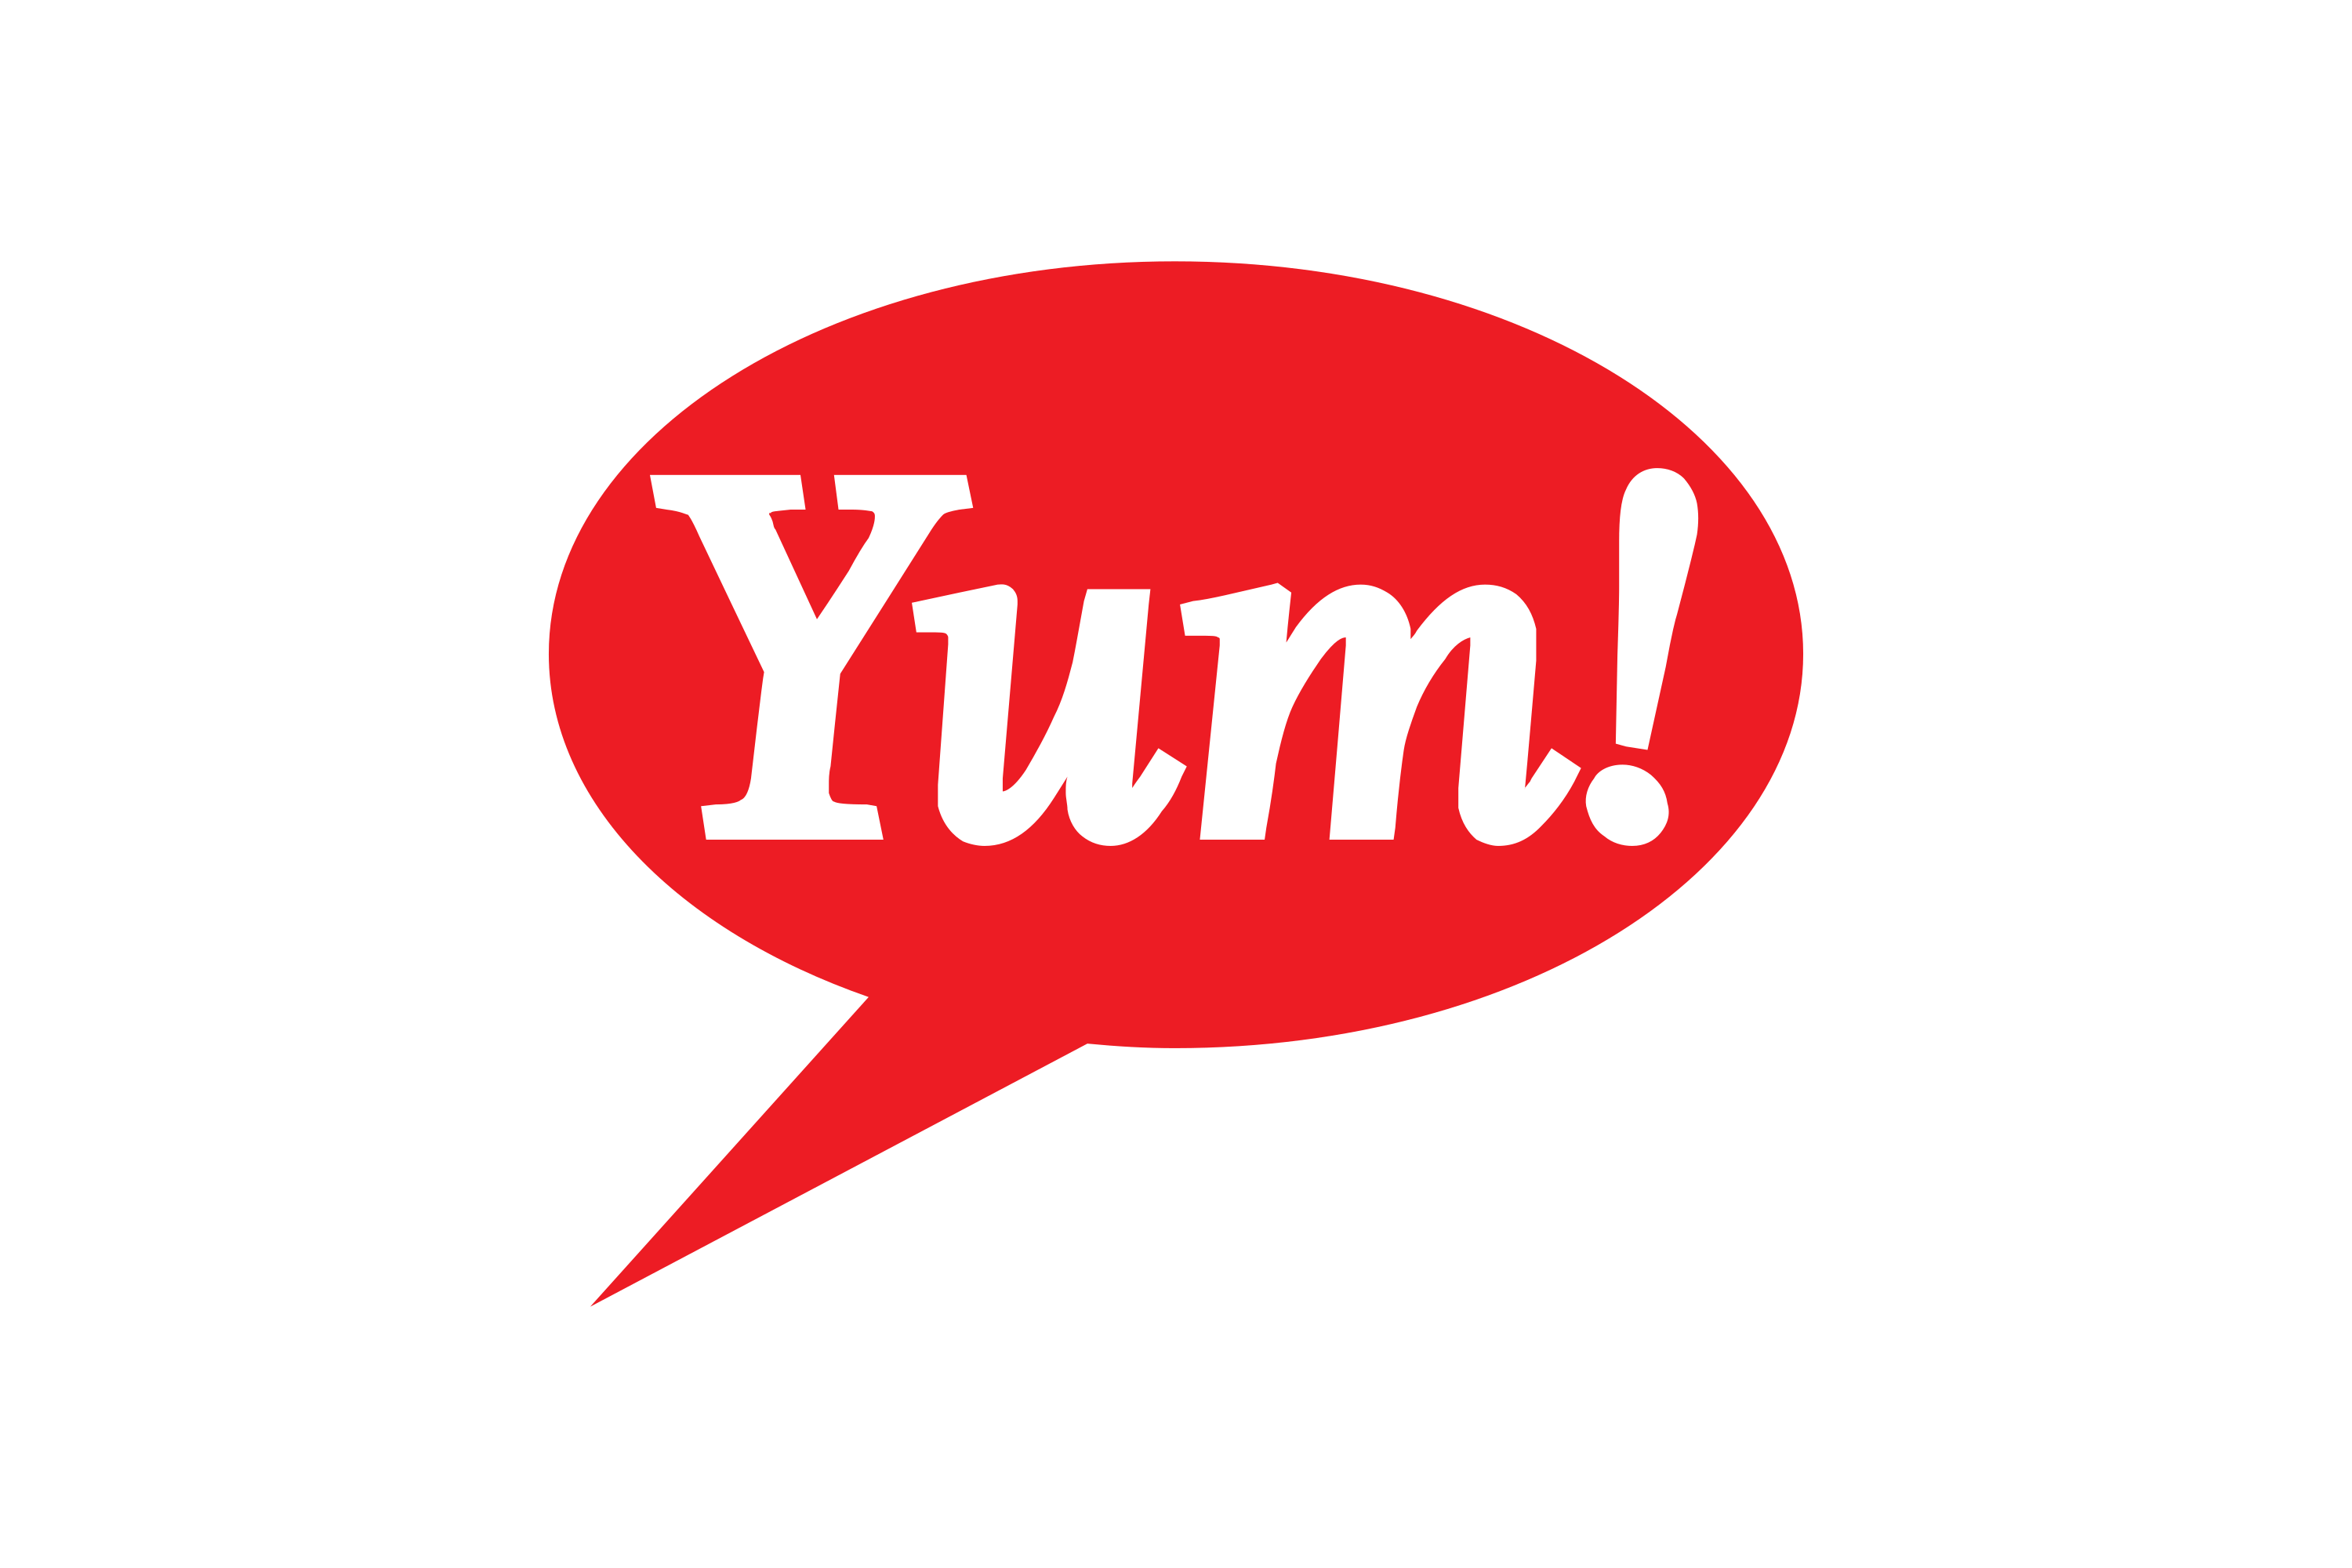 Download Yum! Brands Logo in SVG Vector or PNG File Format - Logo.wine